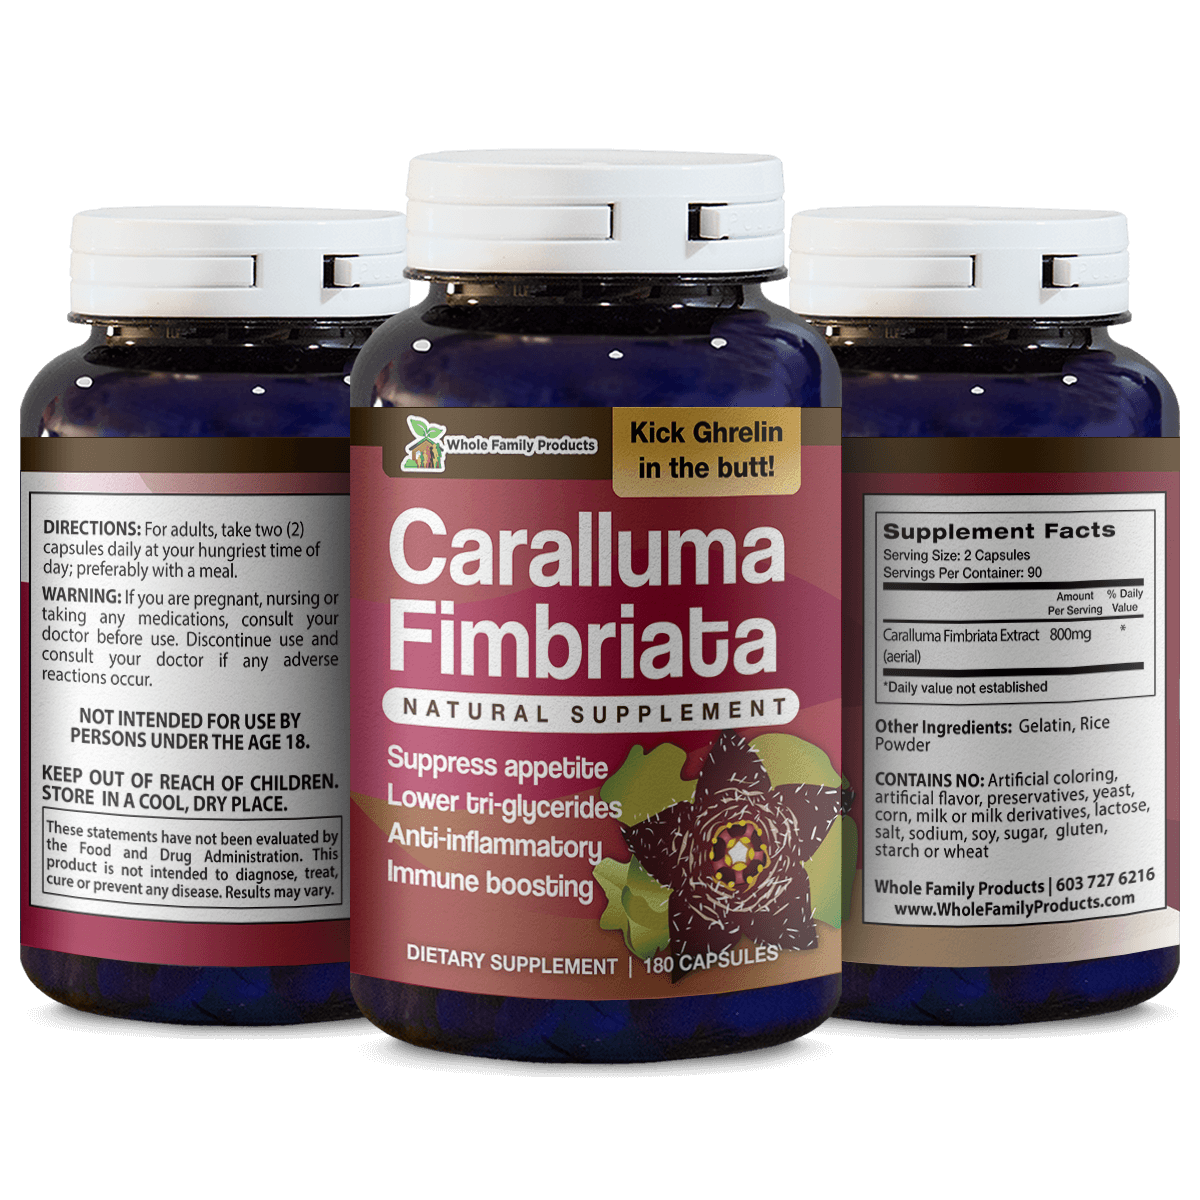 Caralluma Fimbriata Help Reduce Blood Glucose Level